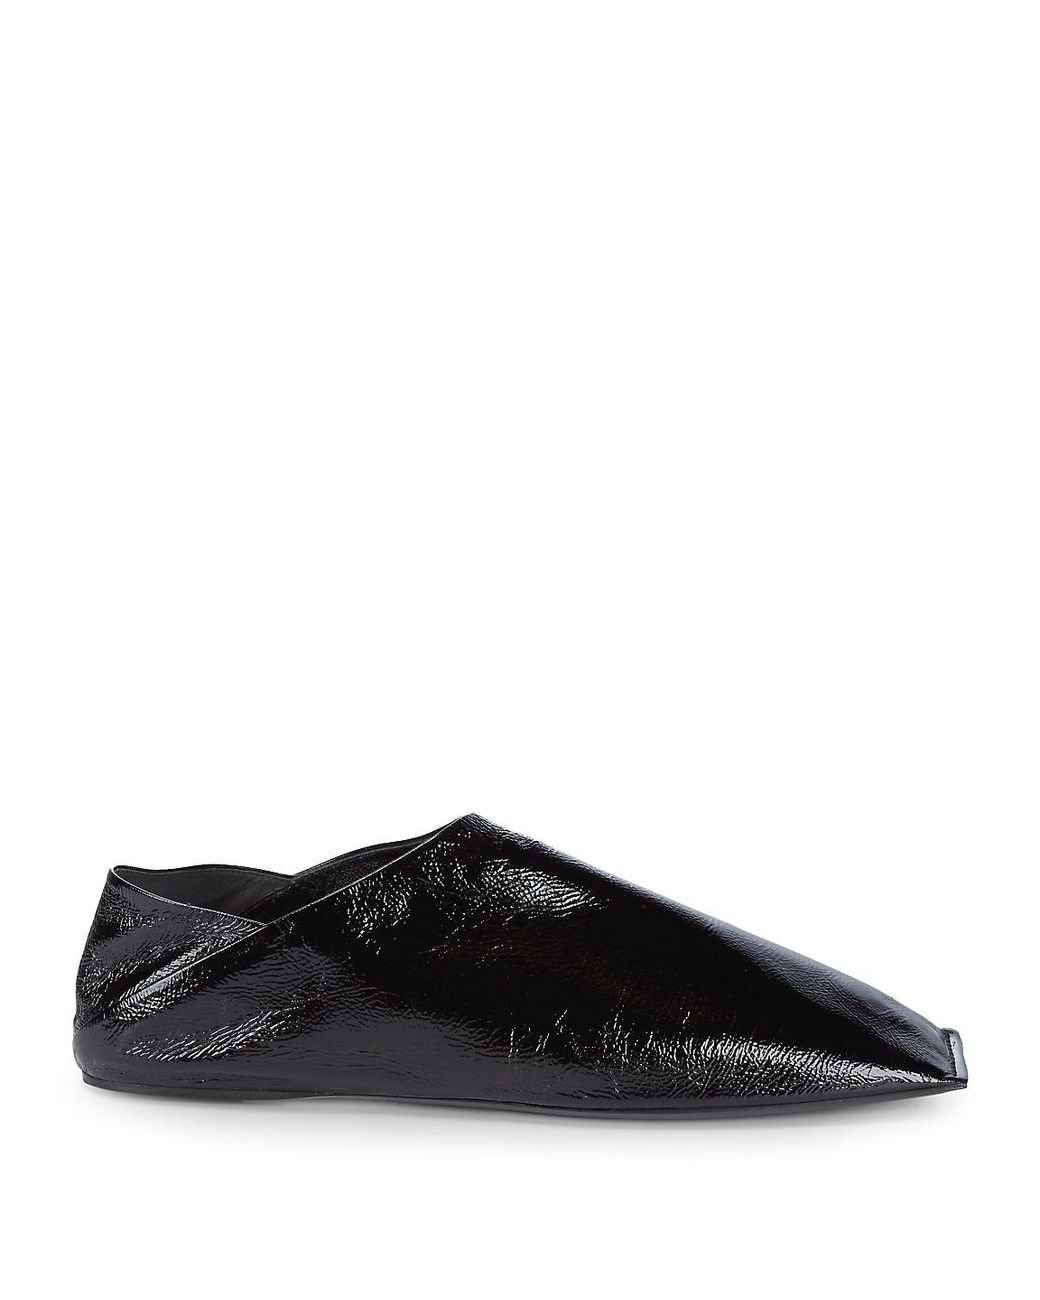 Balenciaga Square Toe Leather Flats in Black | Lyst